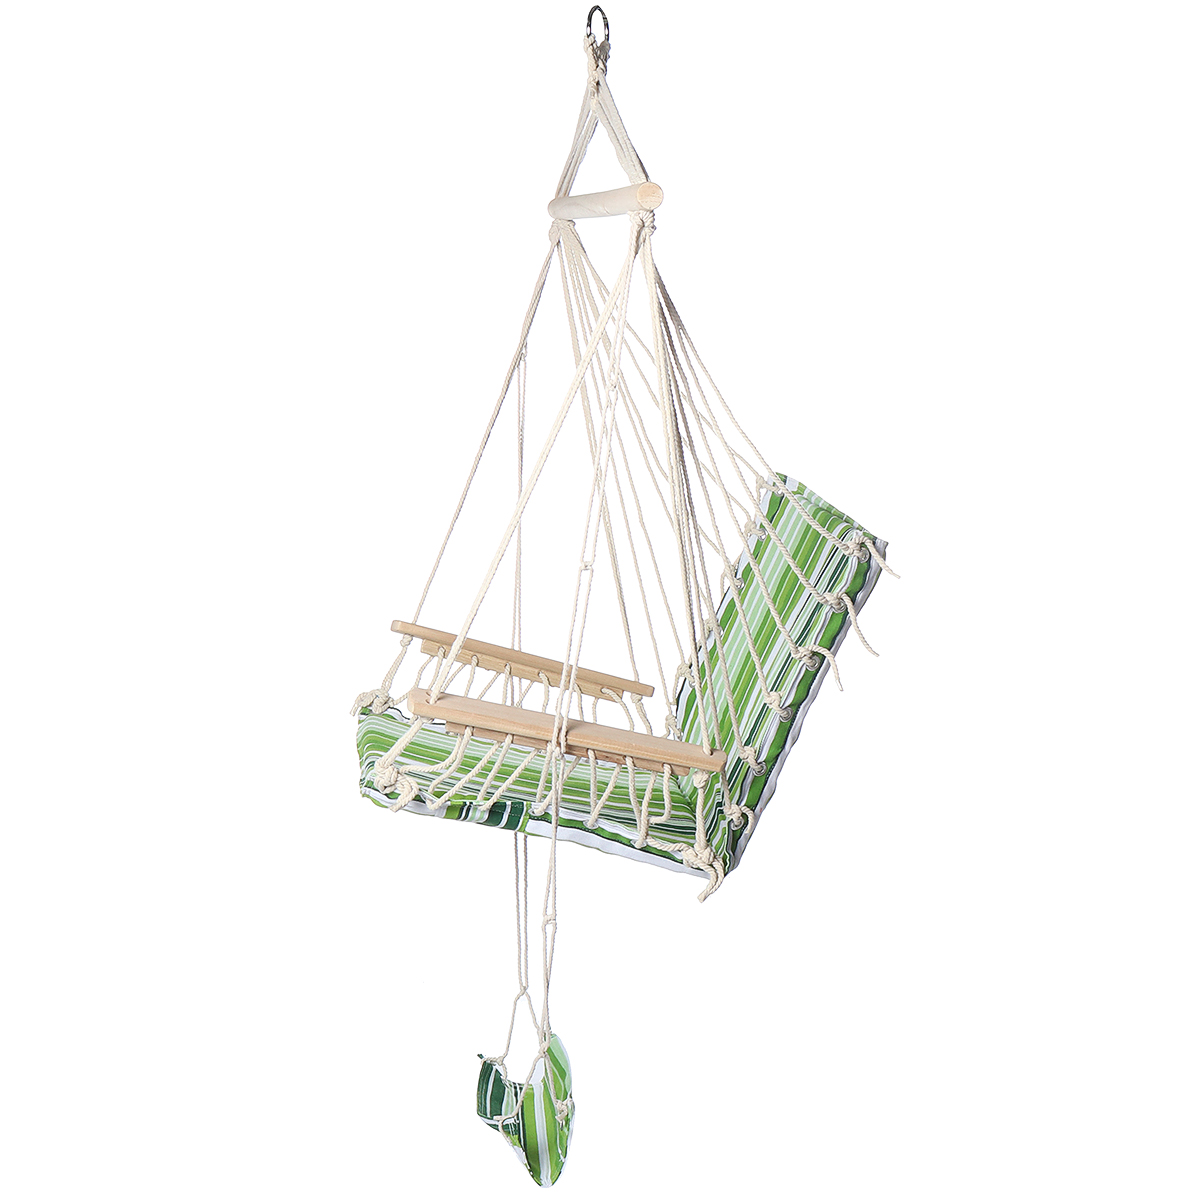 Cotton-Hammock-Chair-Comfortable-Hanging-Swing-Seat-Swing-Cushion-Outdoor-Indoor-Garden-Max-Load-150-1741982-7